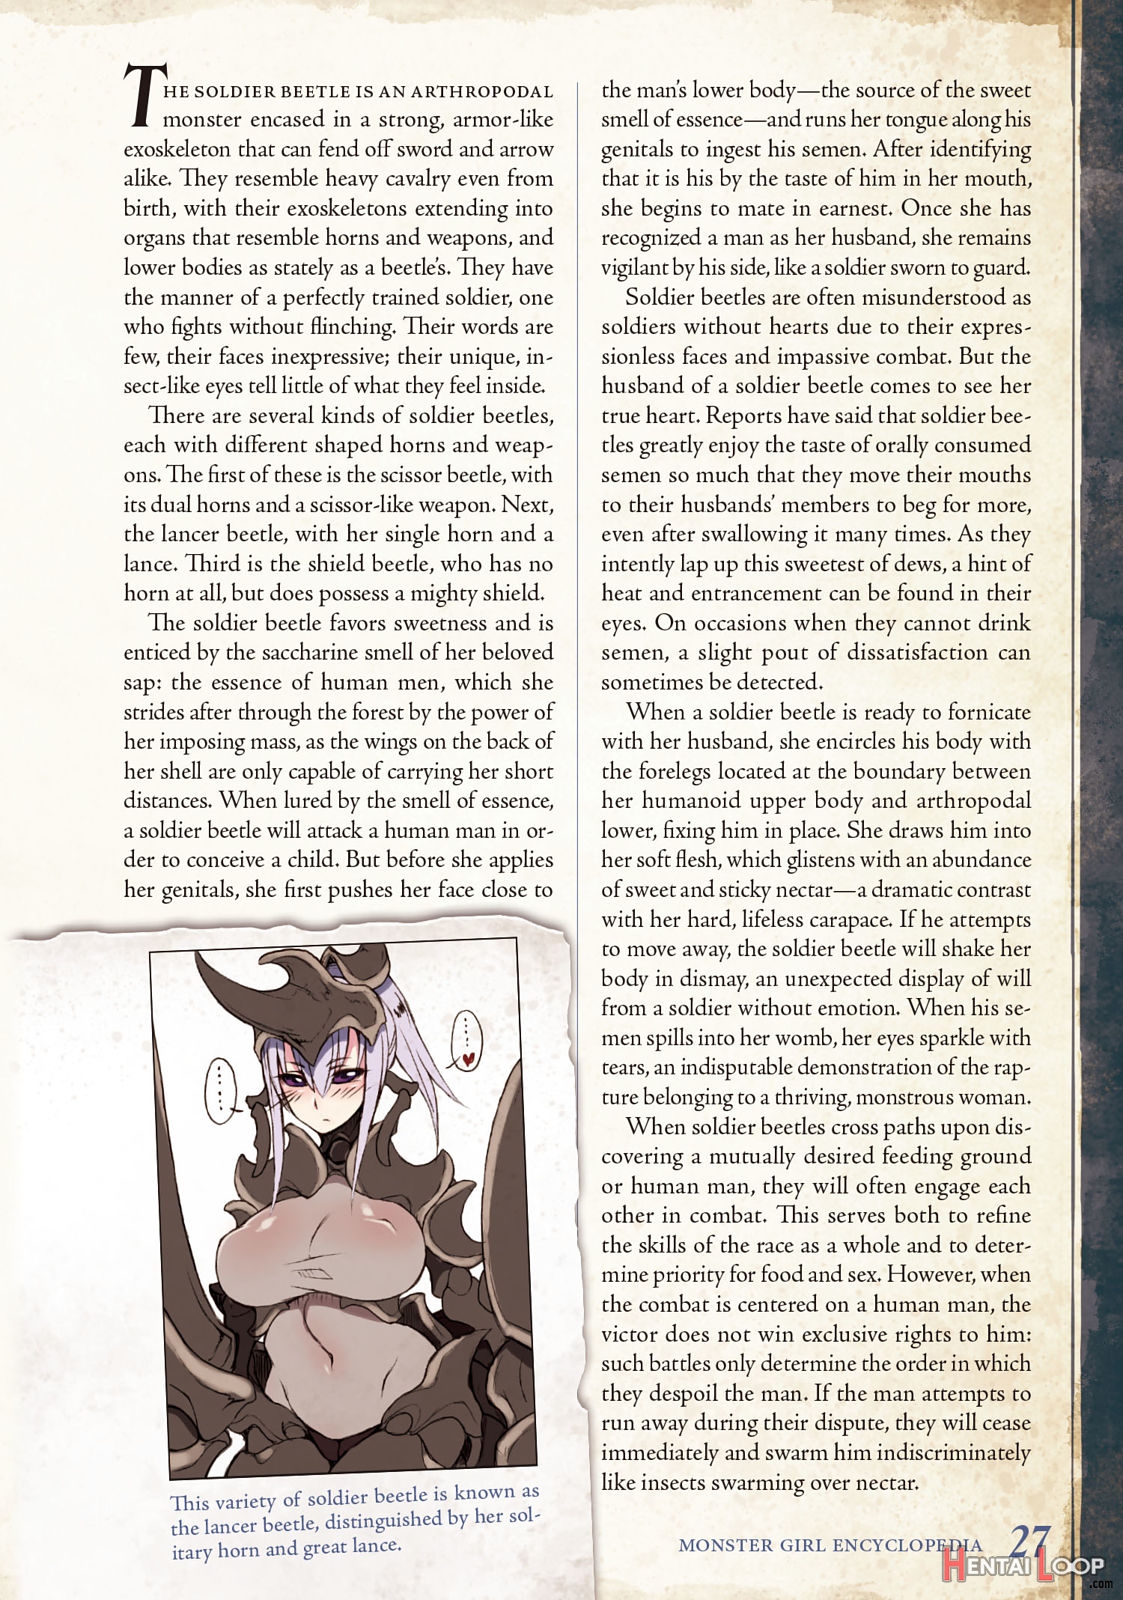 Monster Girl Encyclopedia Vol. 2 page 28